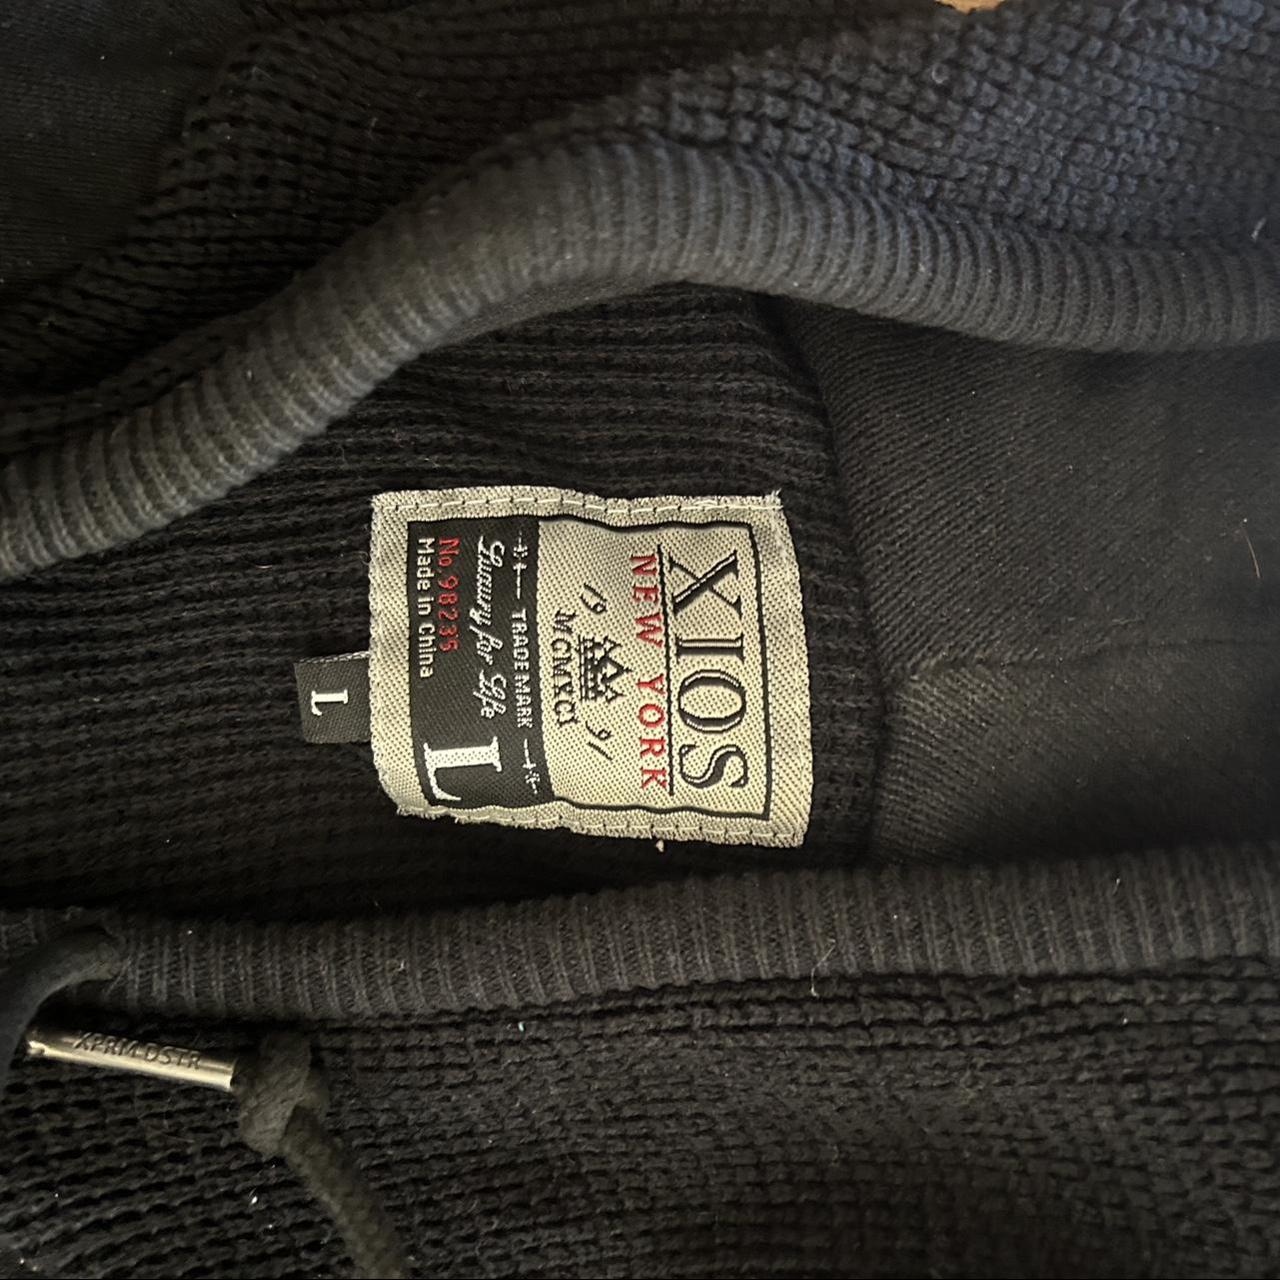 Xios black full zip sweater size L! Great sweater... - Depop